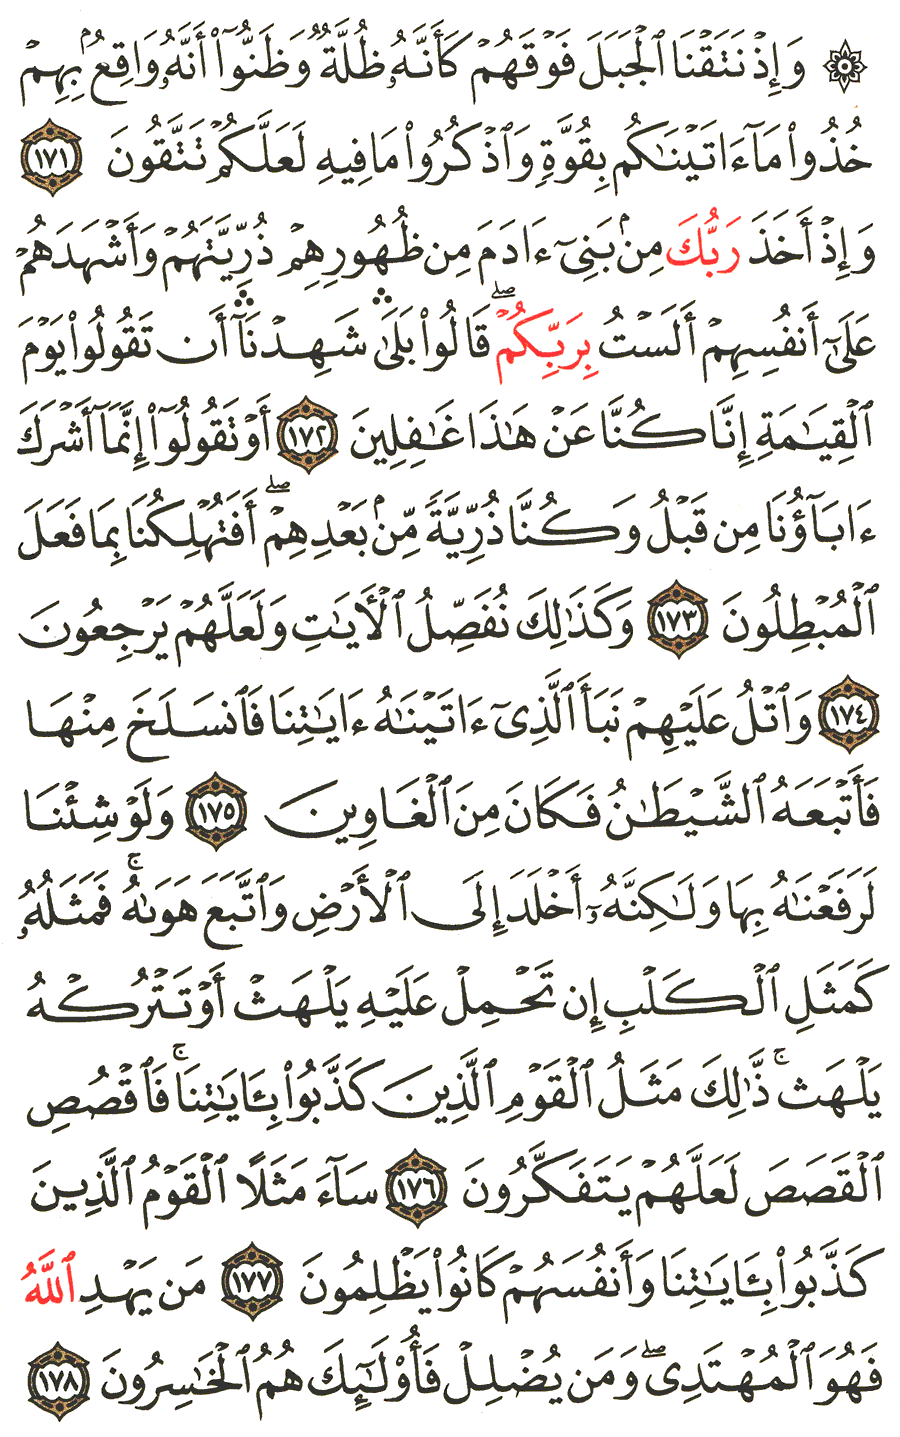 Surah al baqarah ayat 171